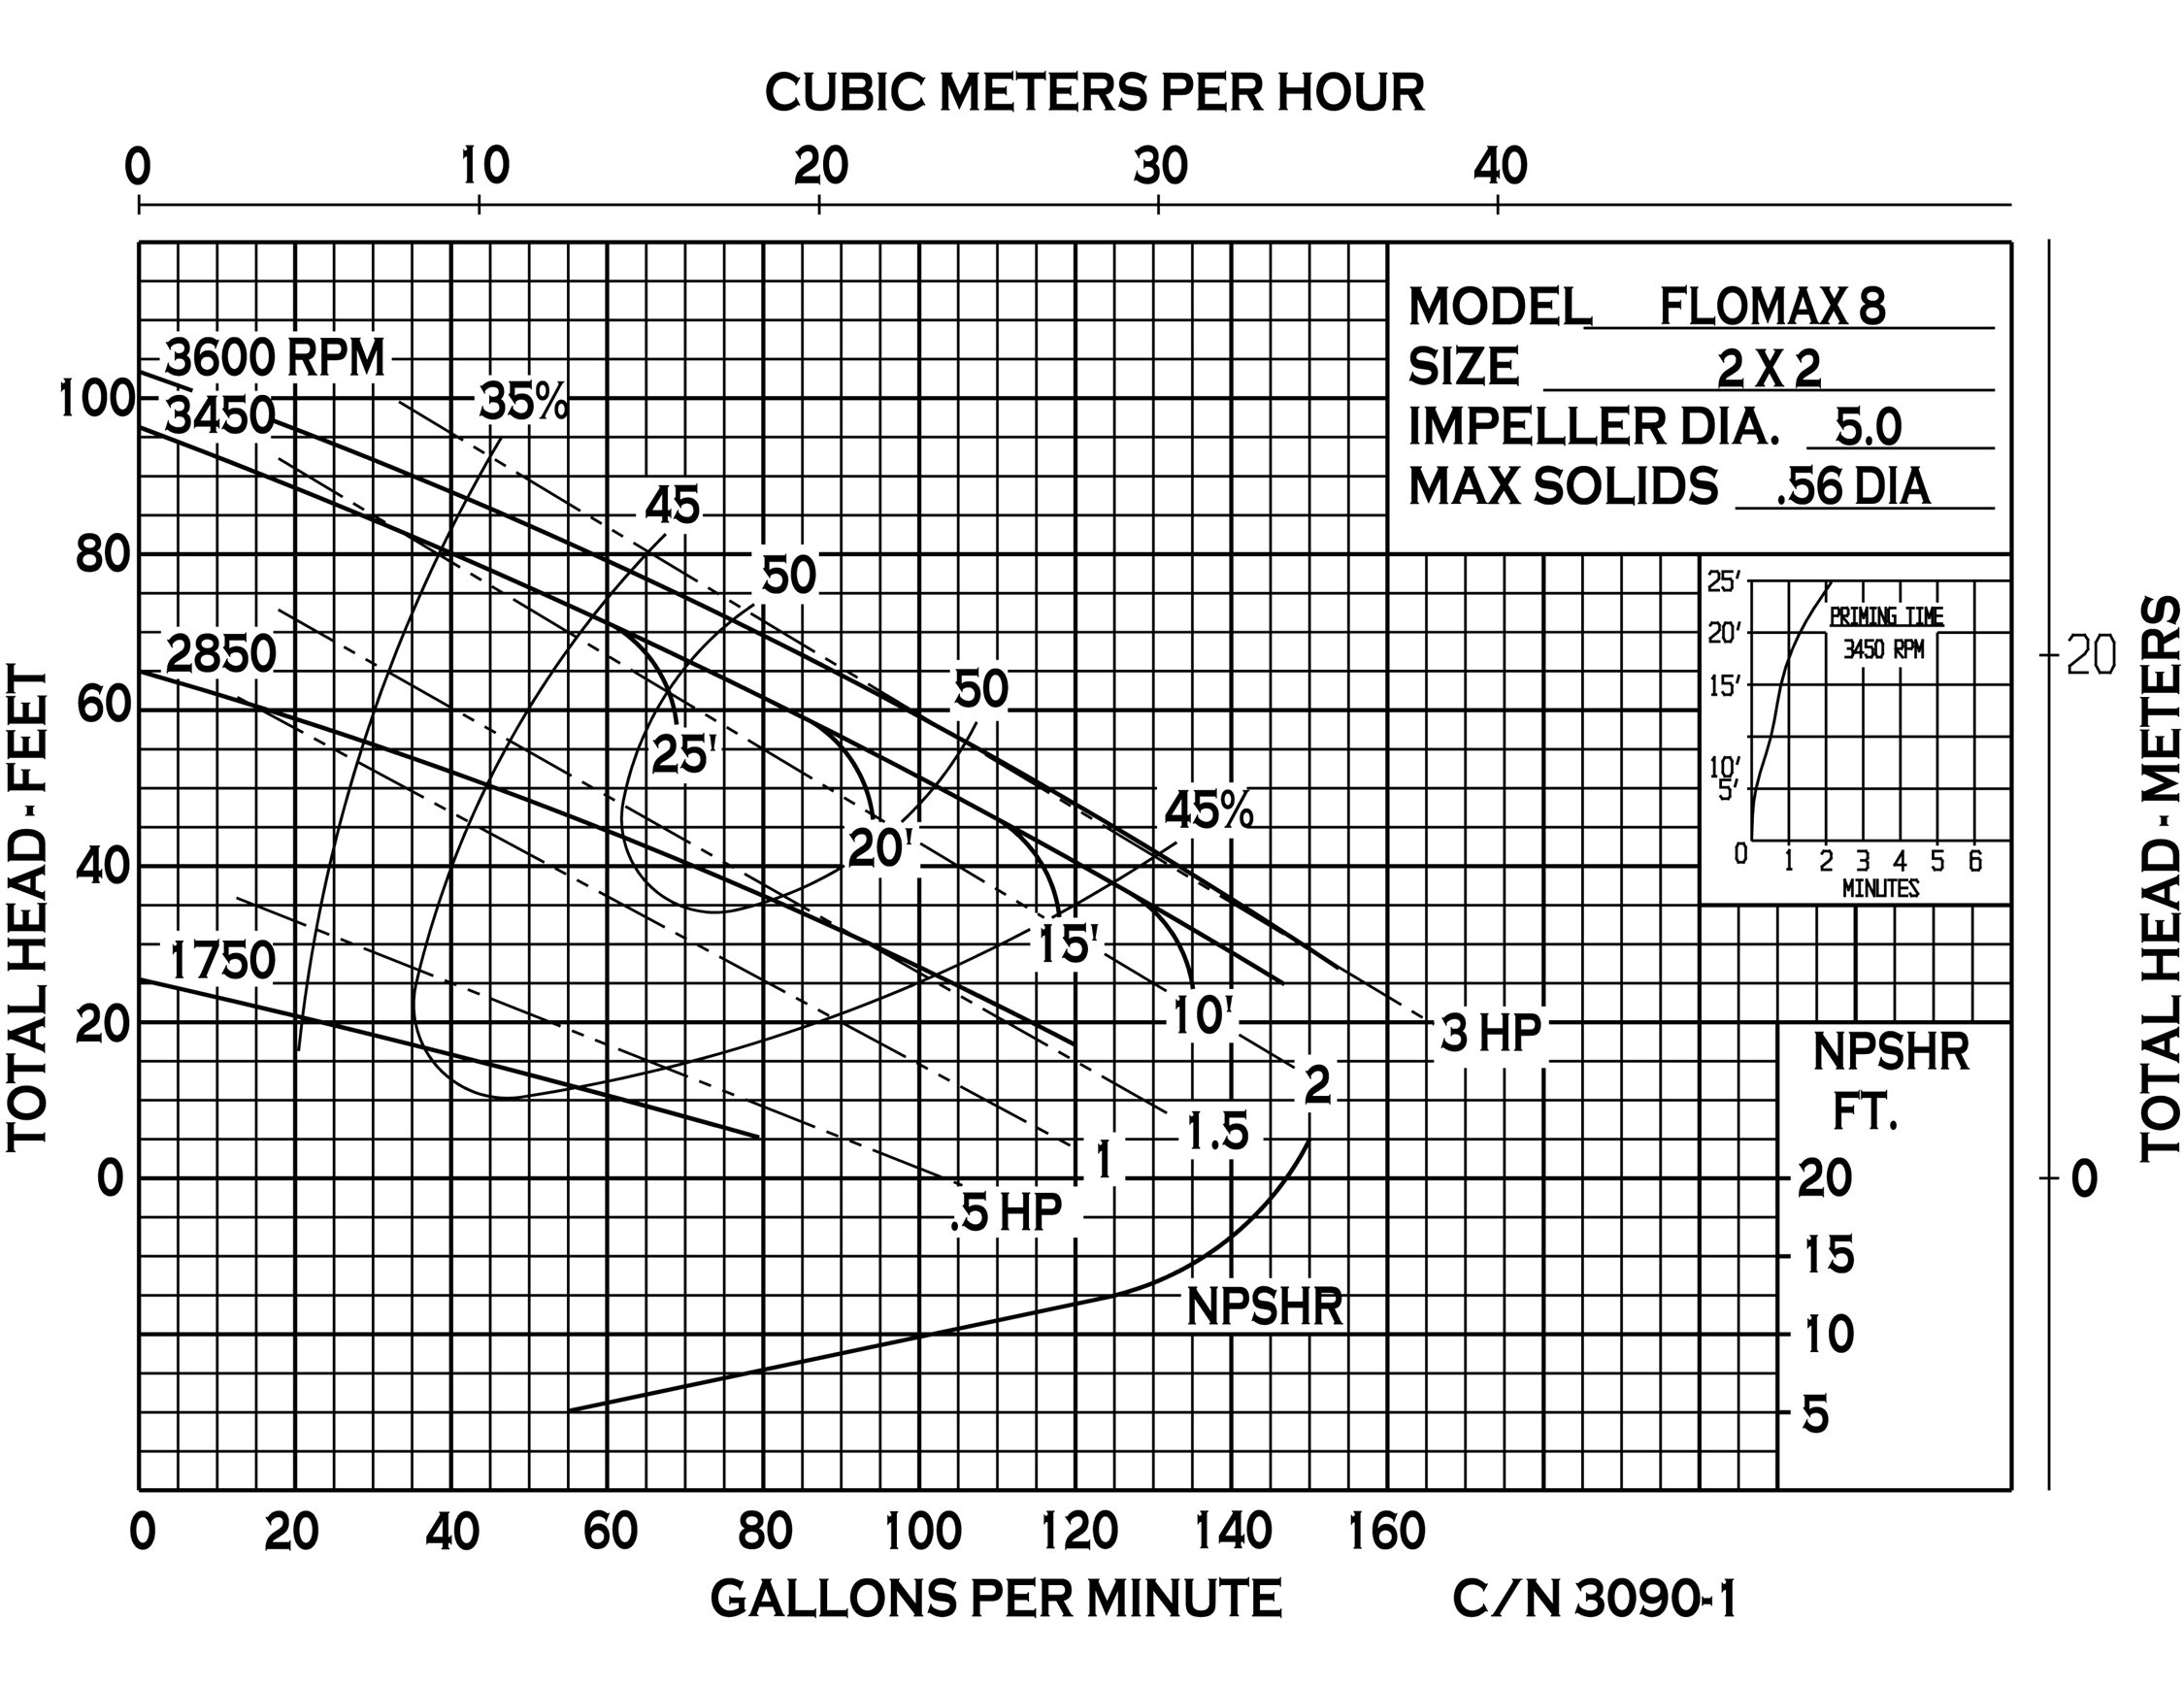 flomax-8-316-ss-industrial-vacuum-pump_curve-3090-1